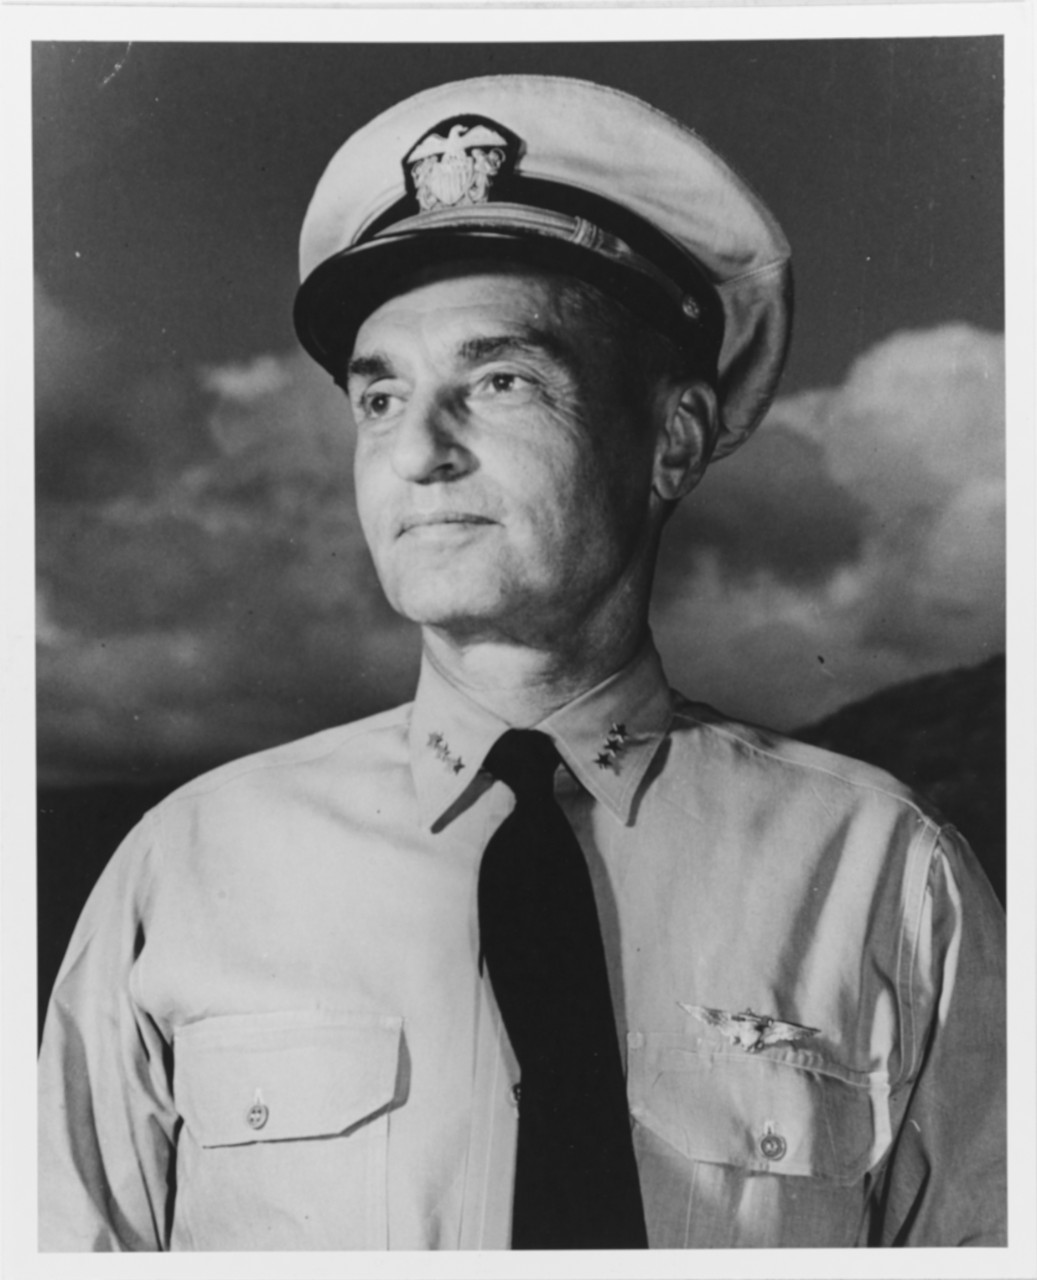 Vice Admiral John H. Hoover, USN